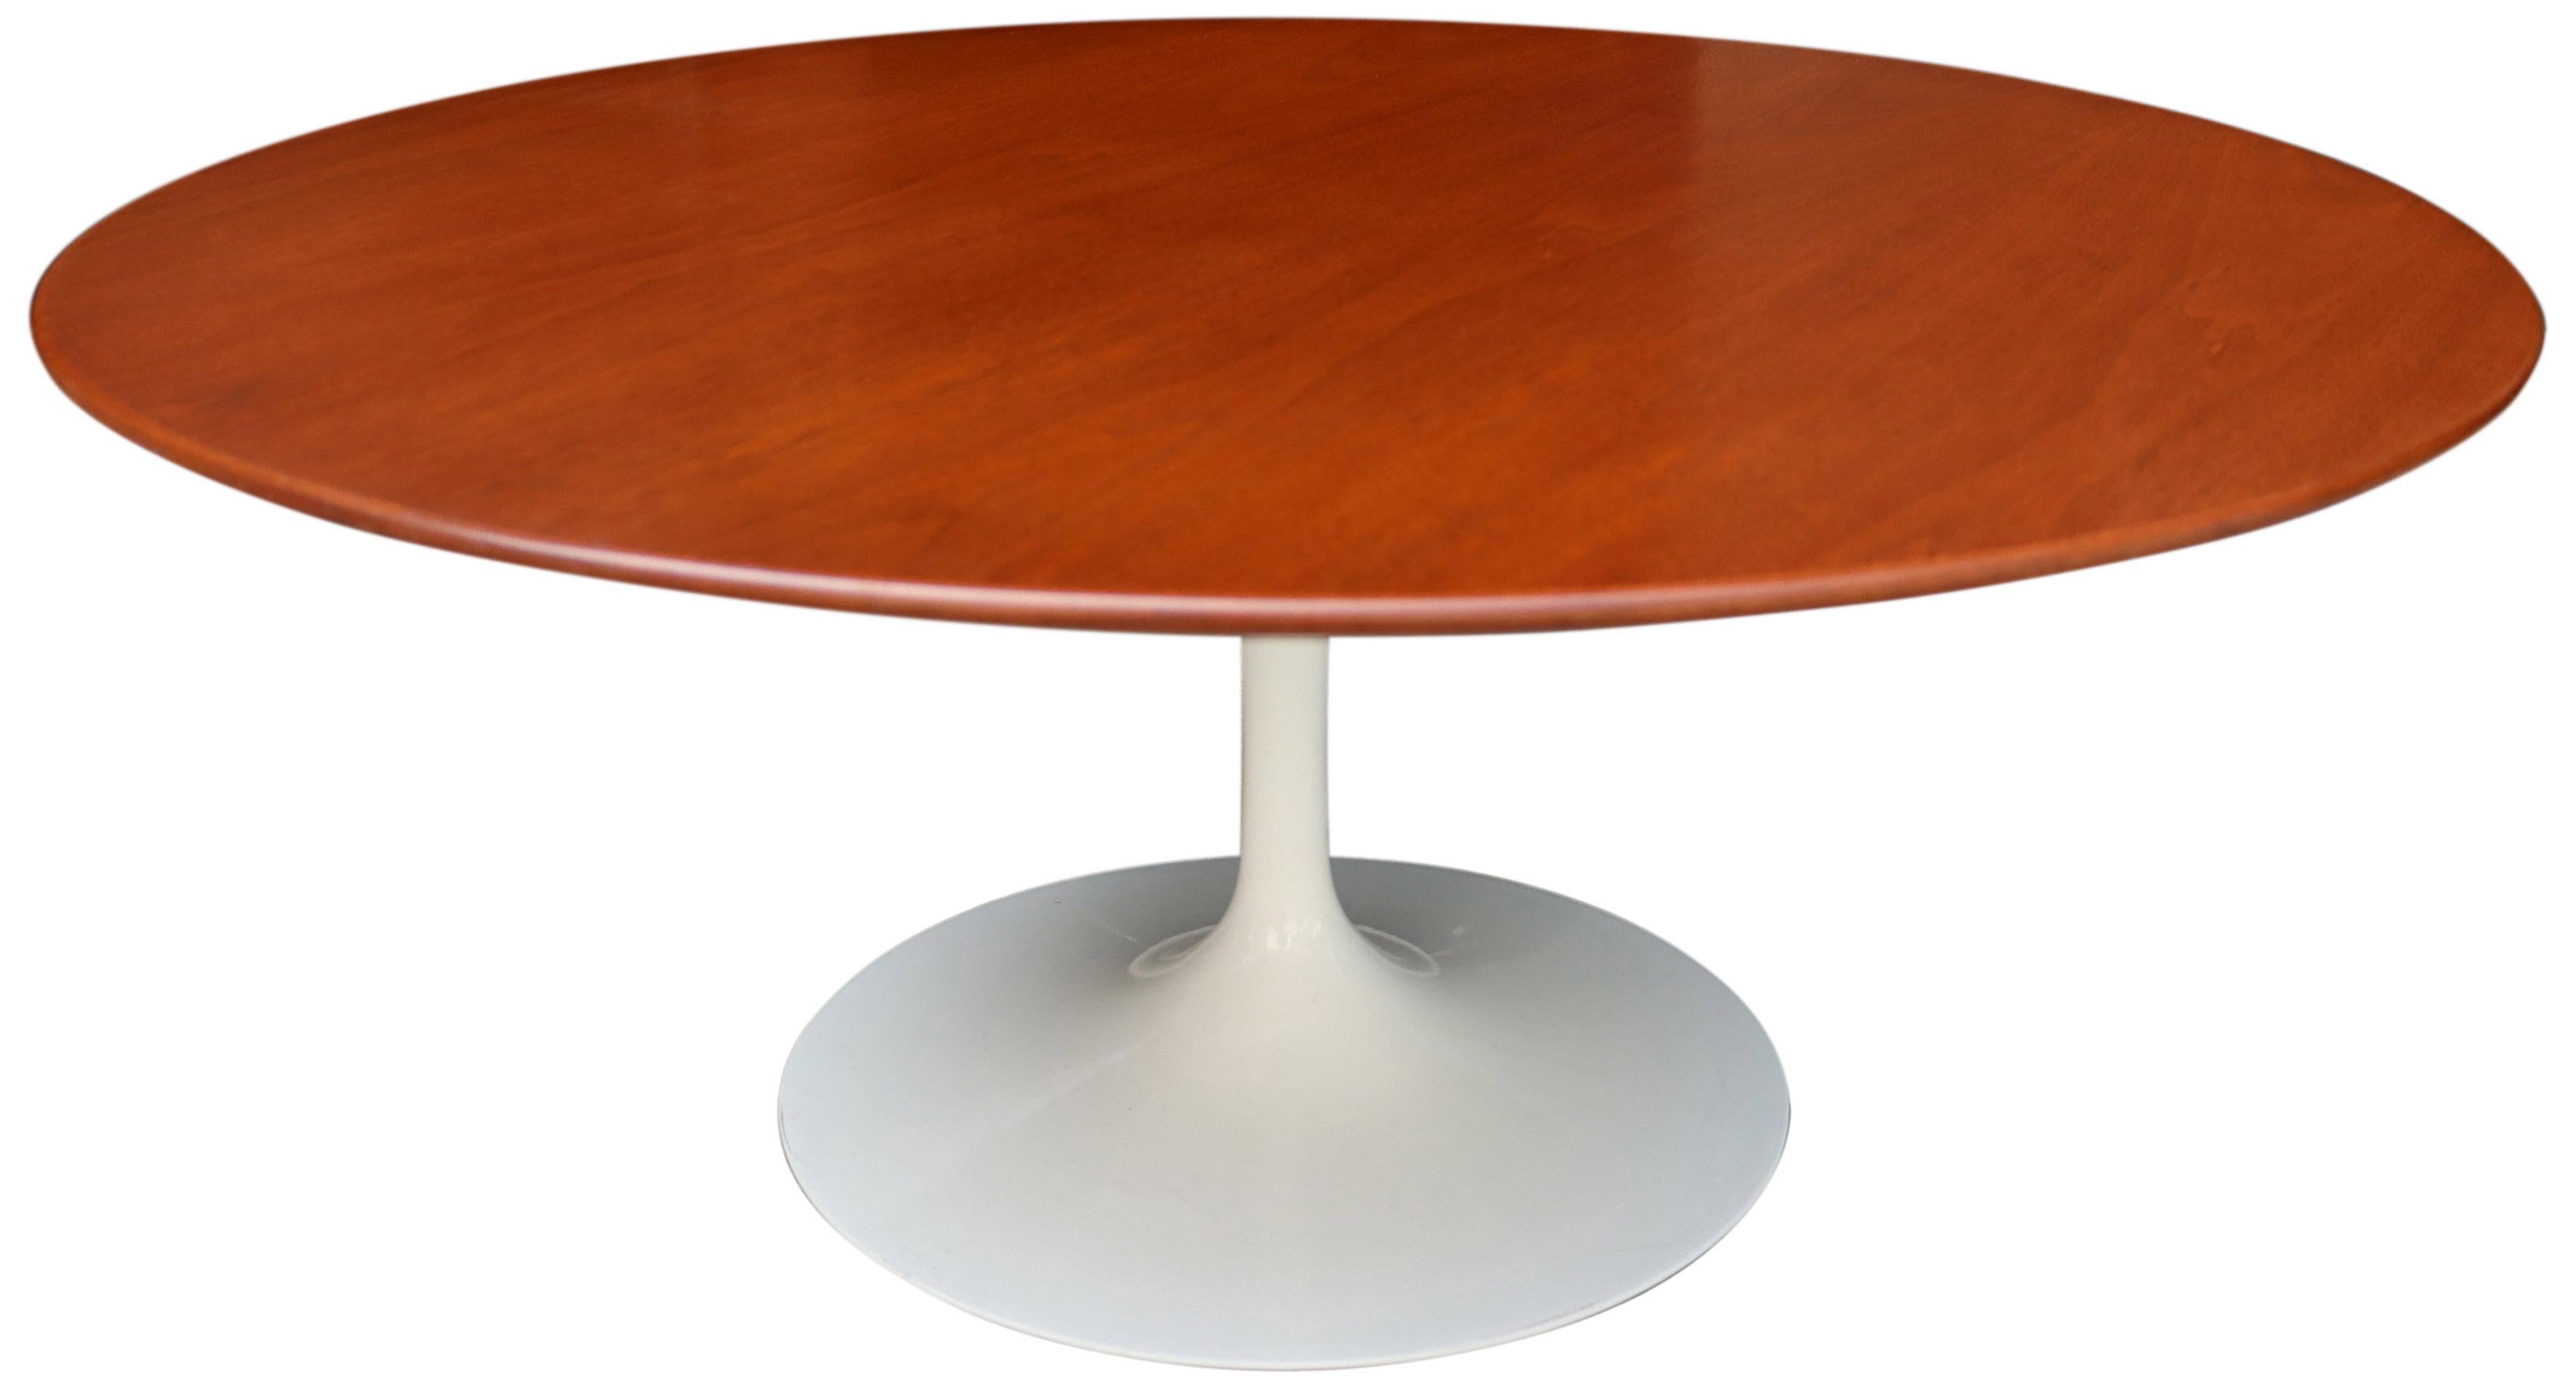 American Eero Saarinen for Knoll Round Tulip Coffee Table